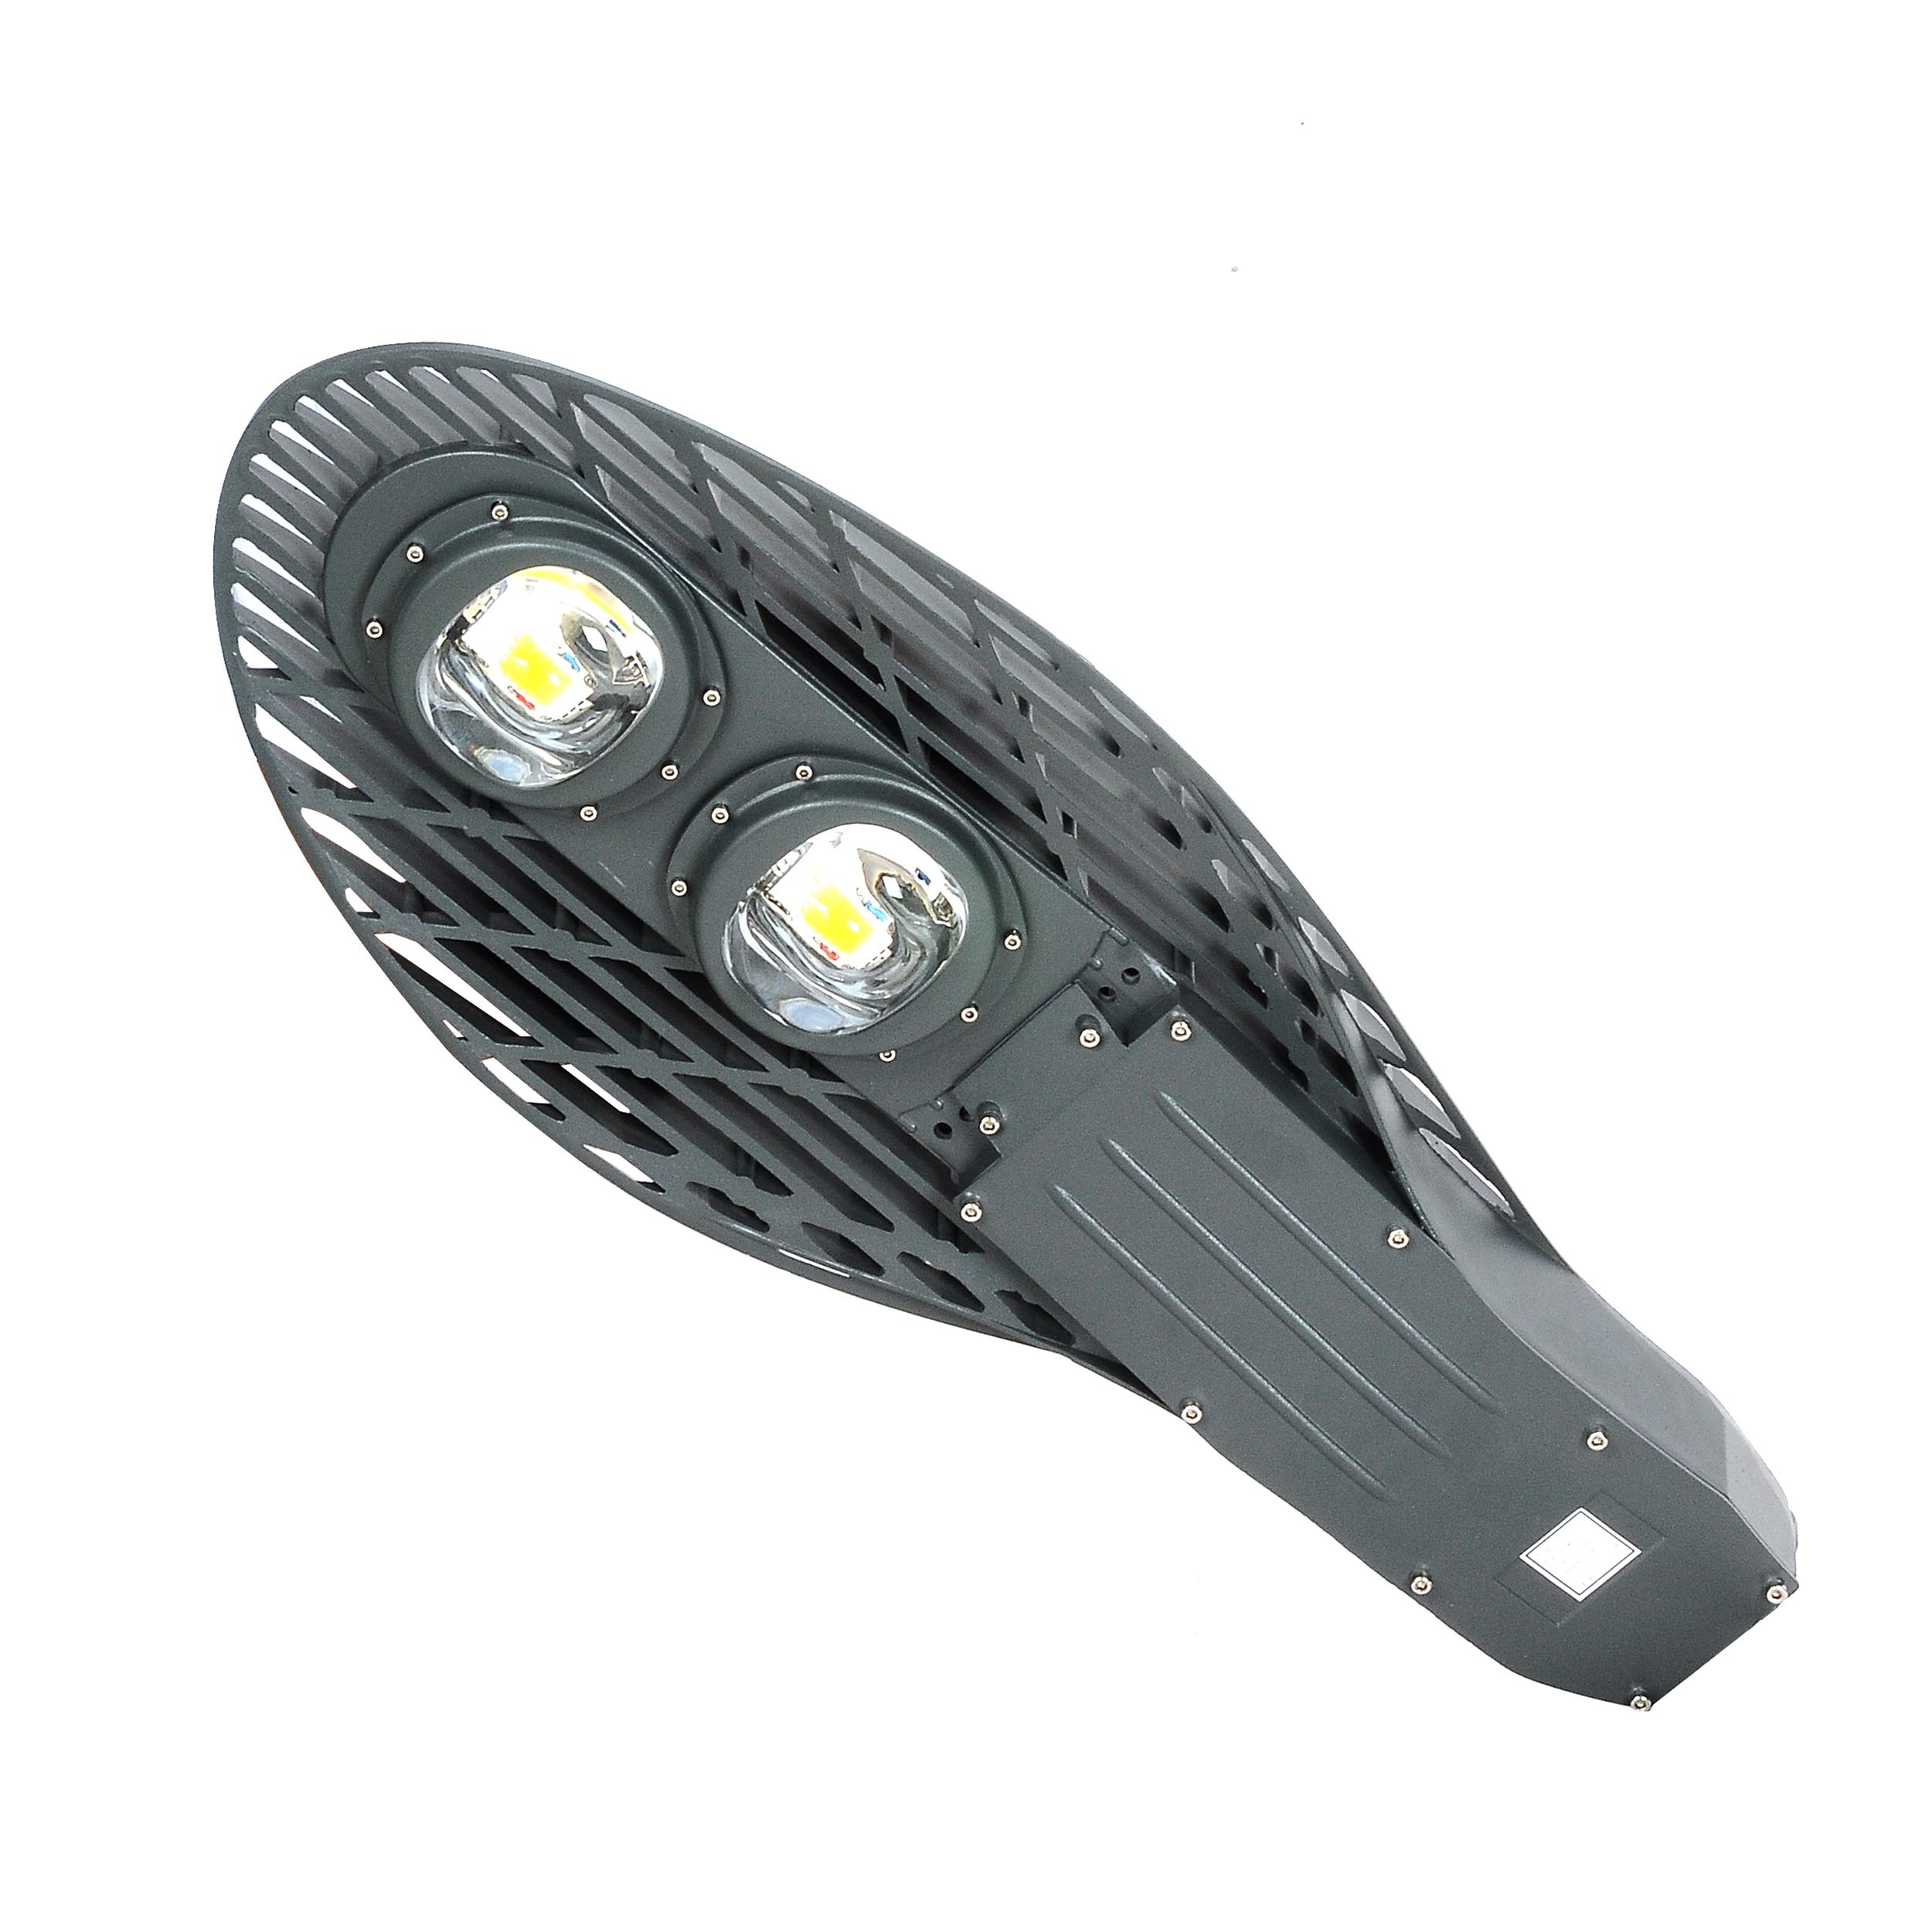 Lasted design high lumens LED street light fixture Ra>70 50W 100W outdoor LED lighting equipment 